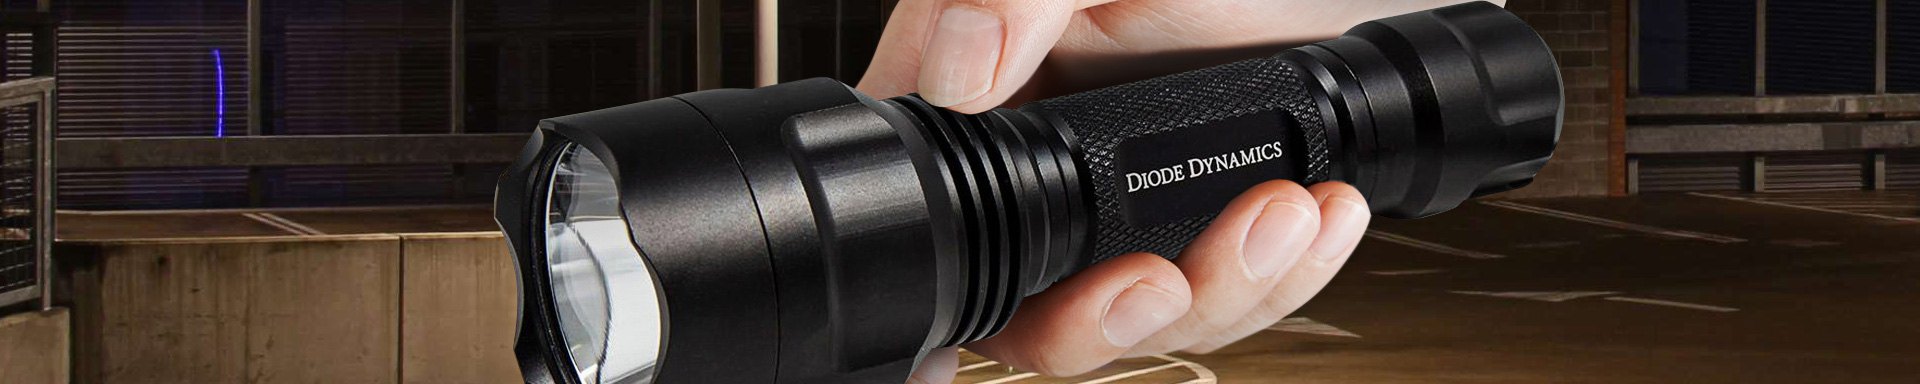 Diode Dynamics Work Flashlights & Accessories